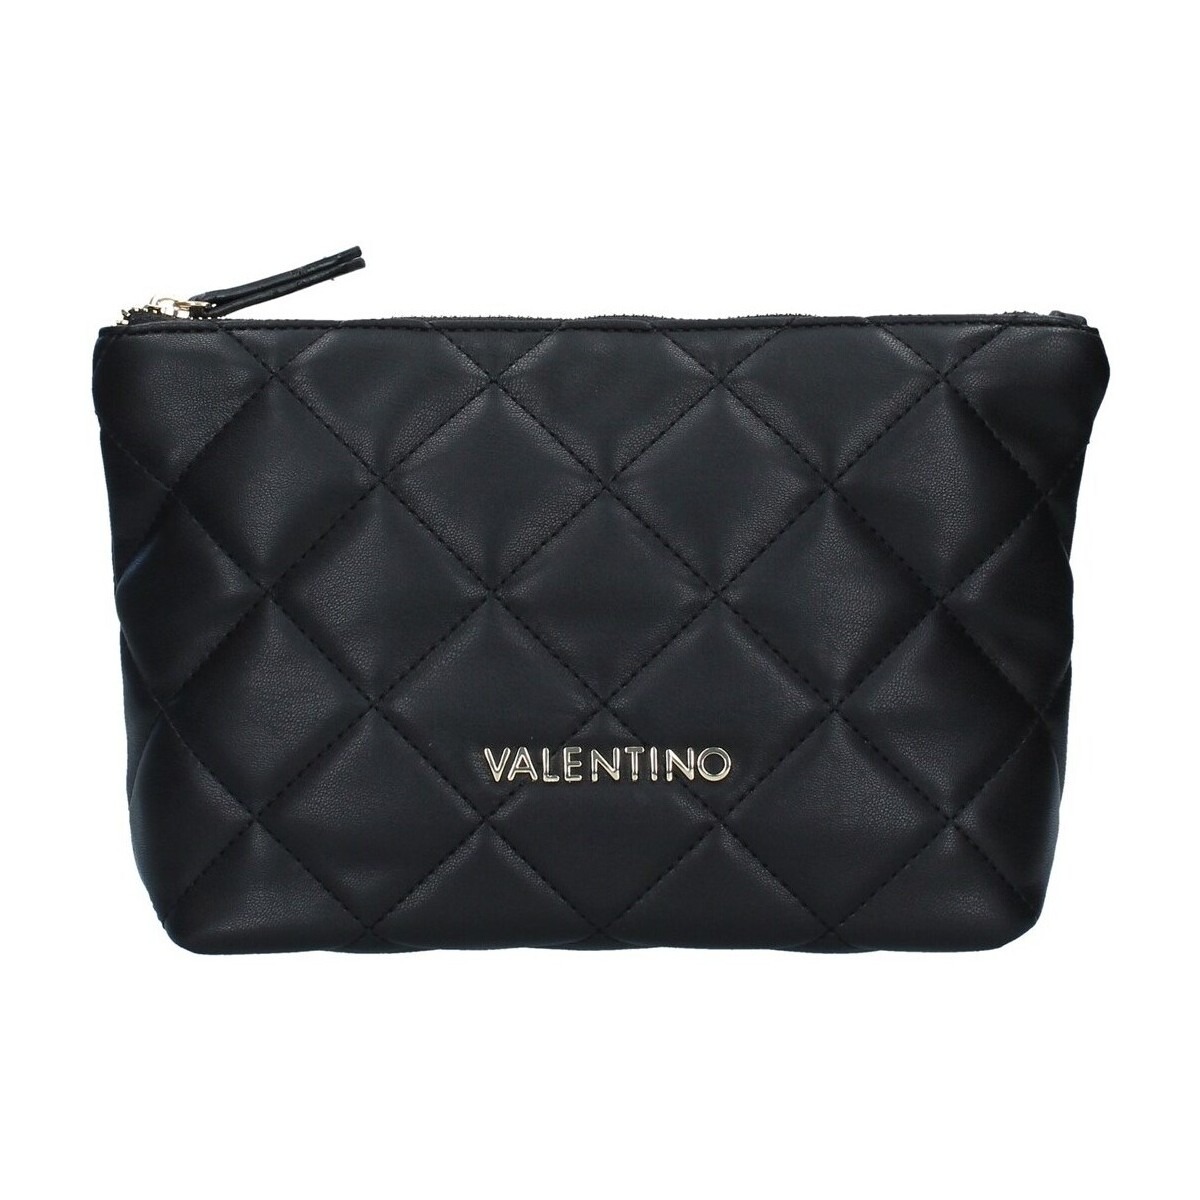 Valentino Lady Bag in Black at Spartoo GOOFASH